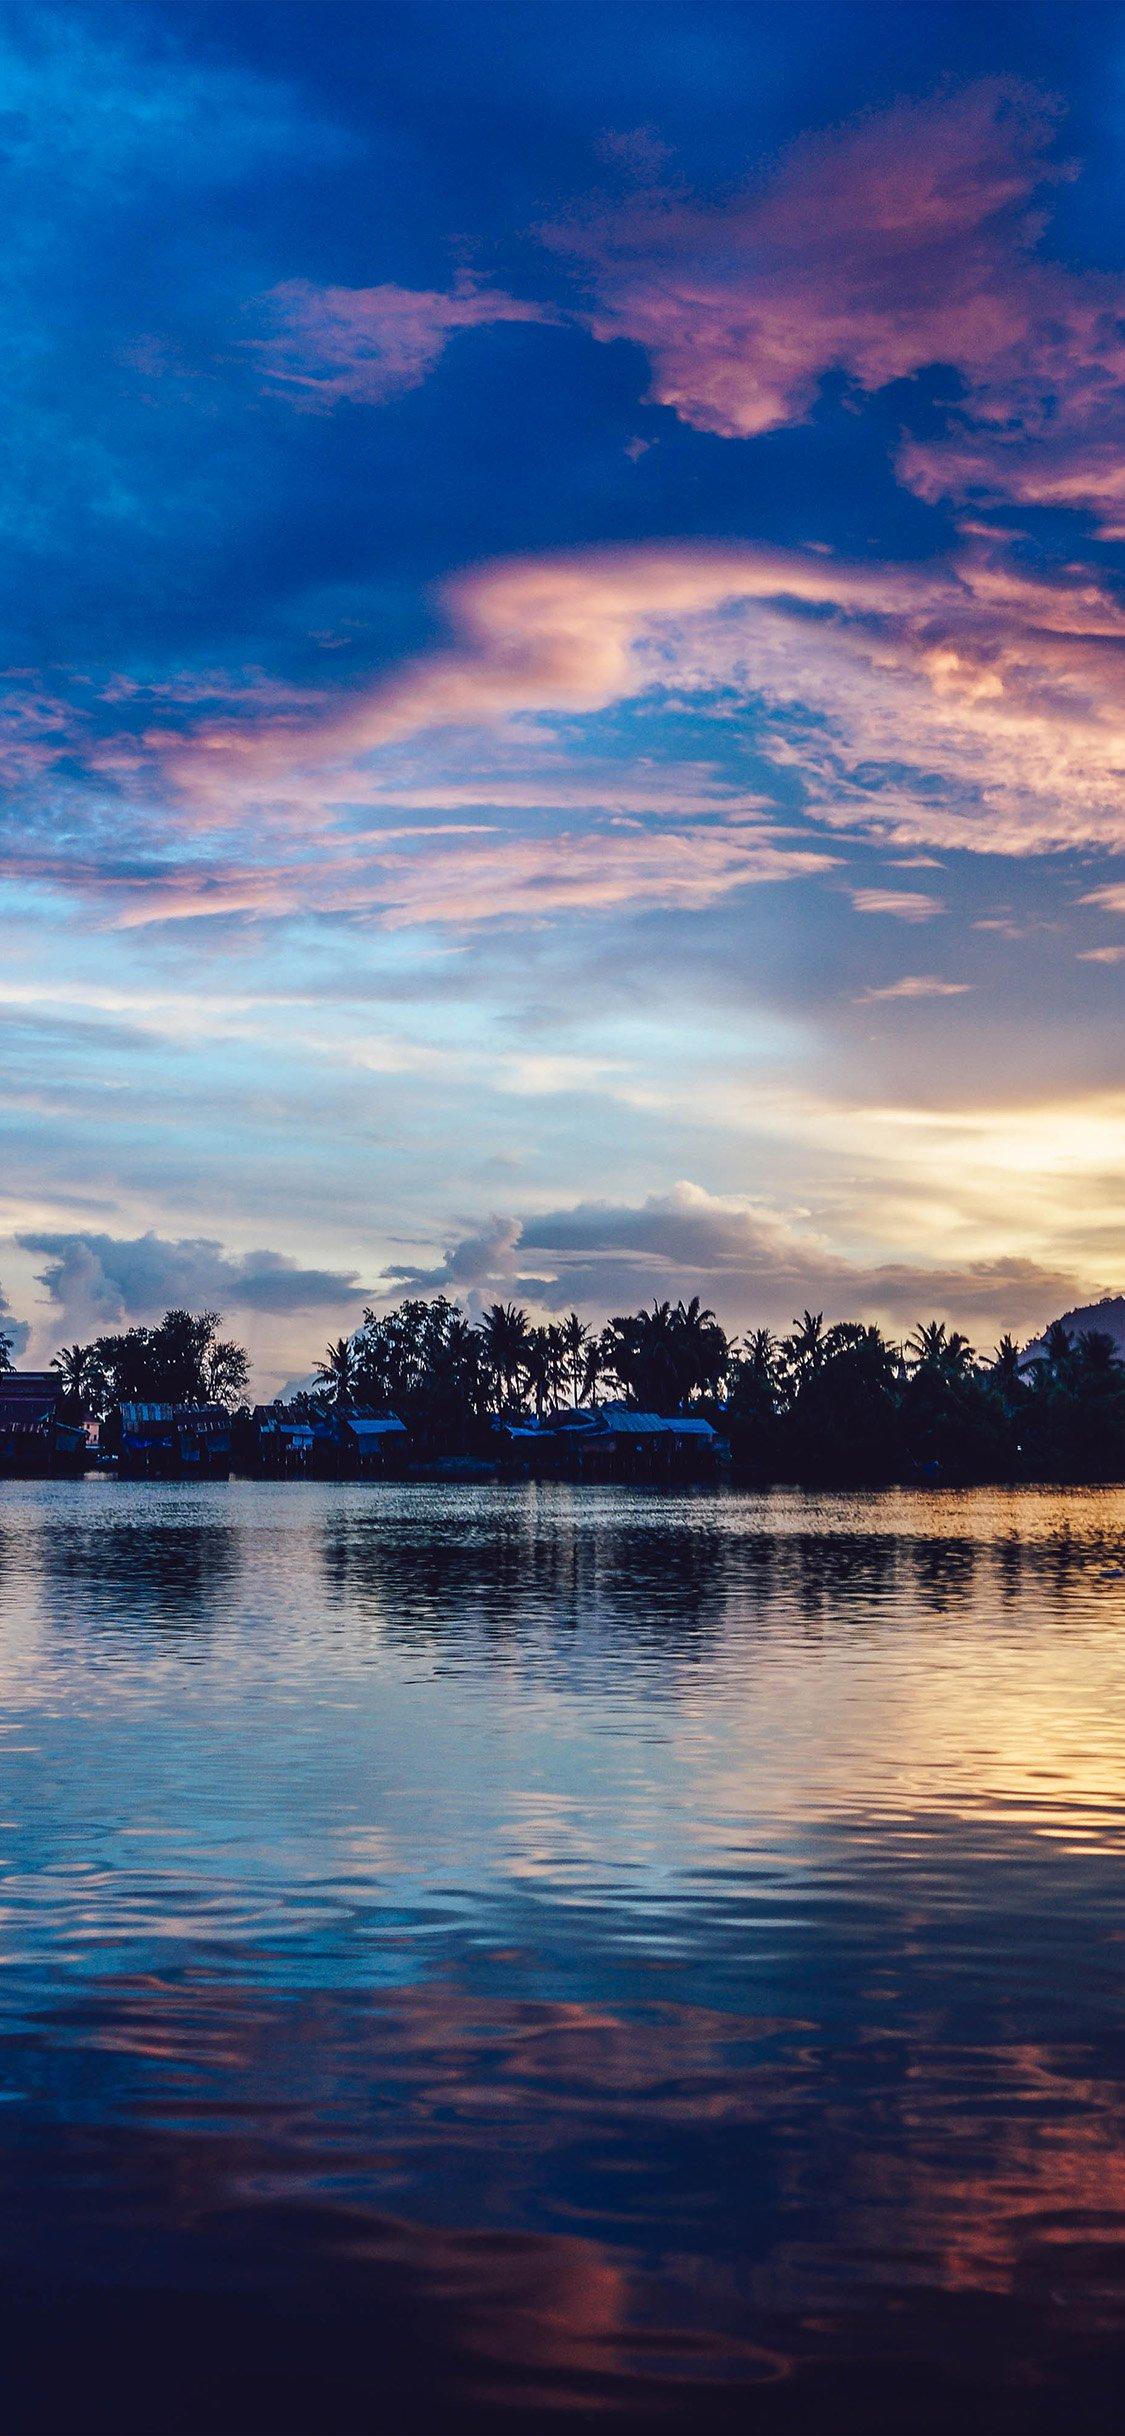 Sunset river lake beautiful iPhone X Wallpaper Free Download